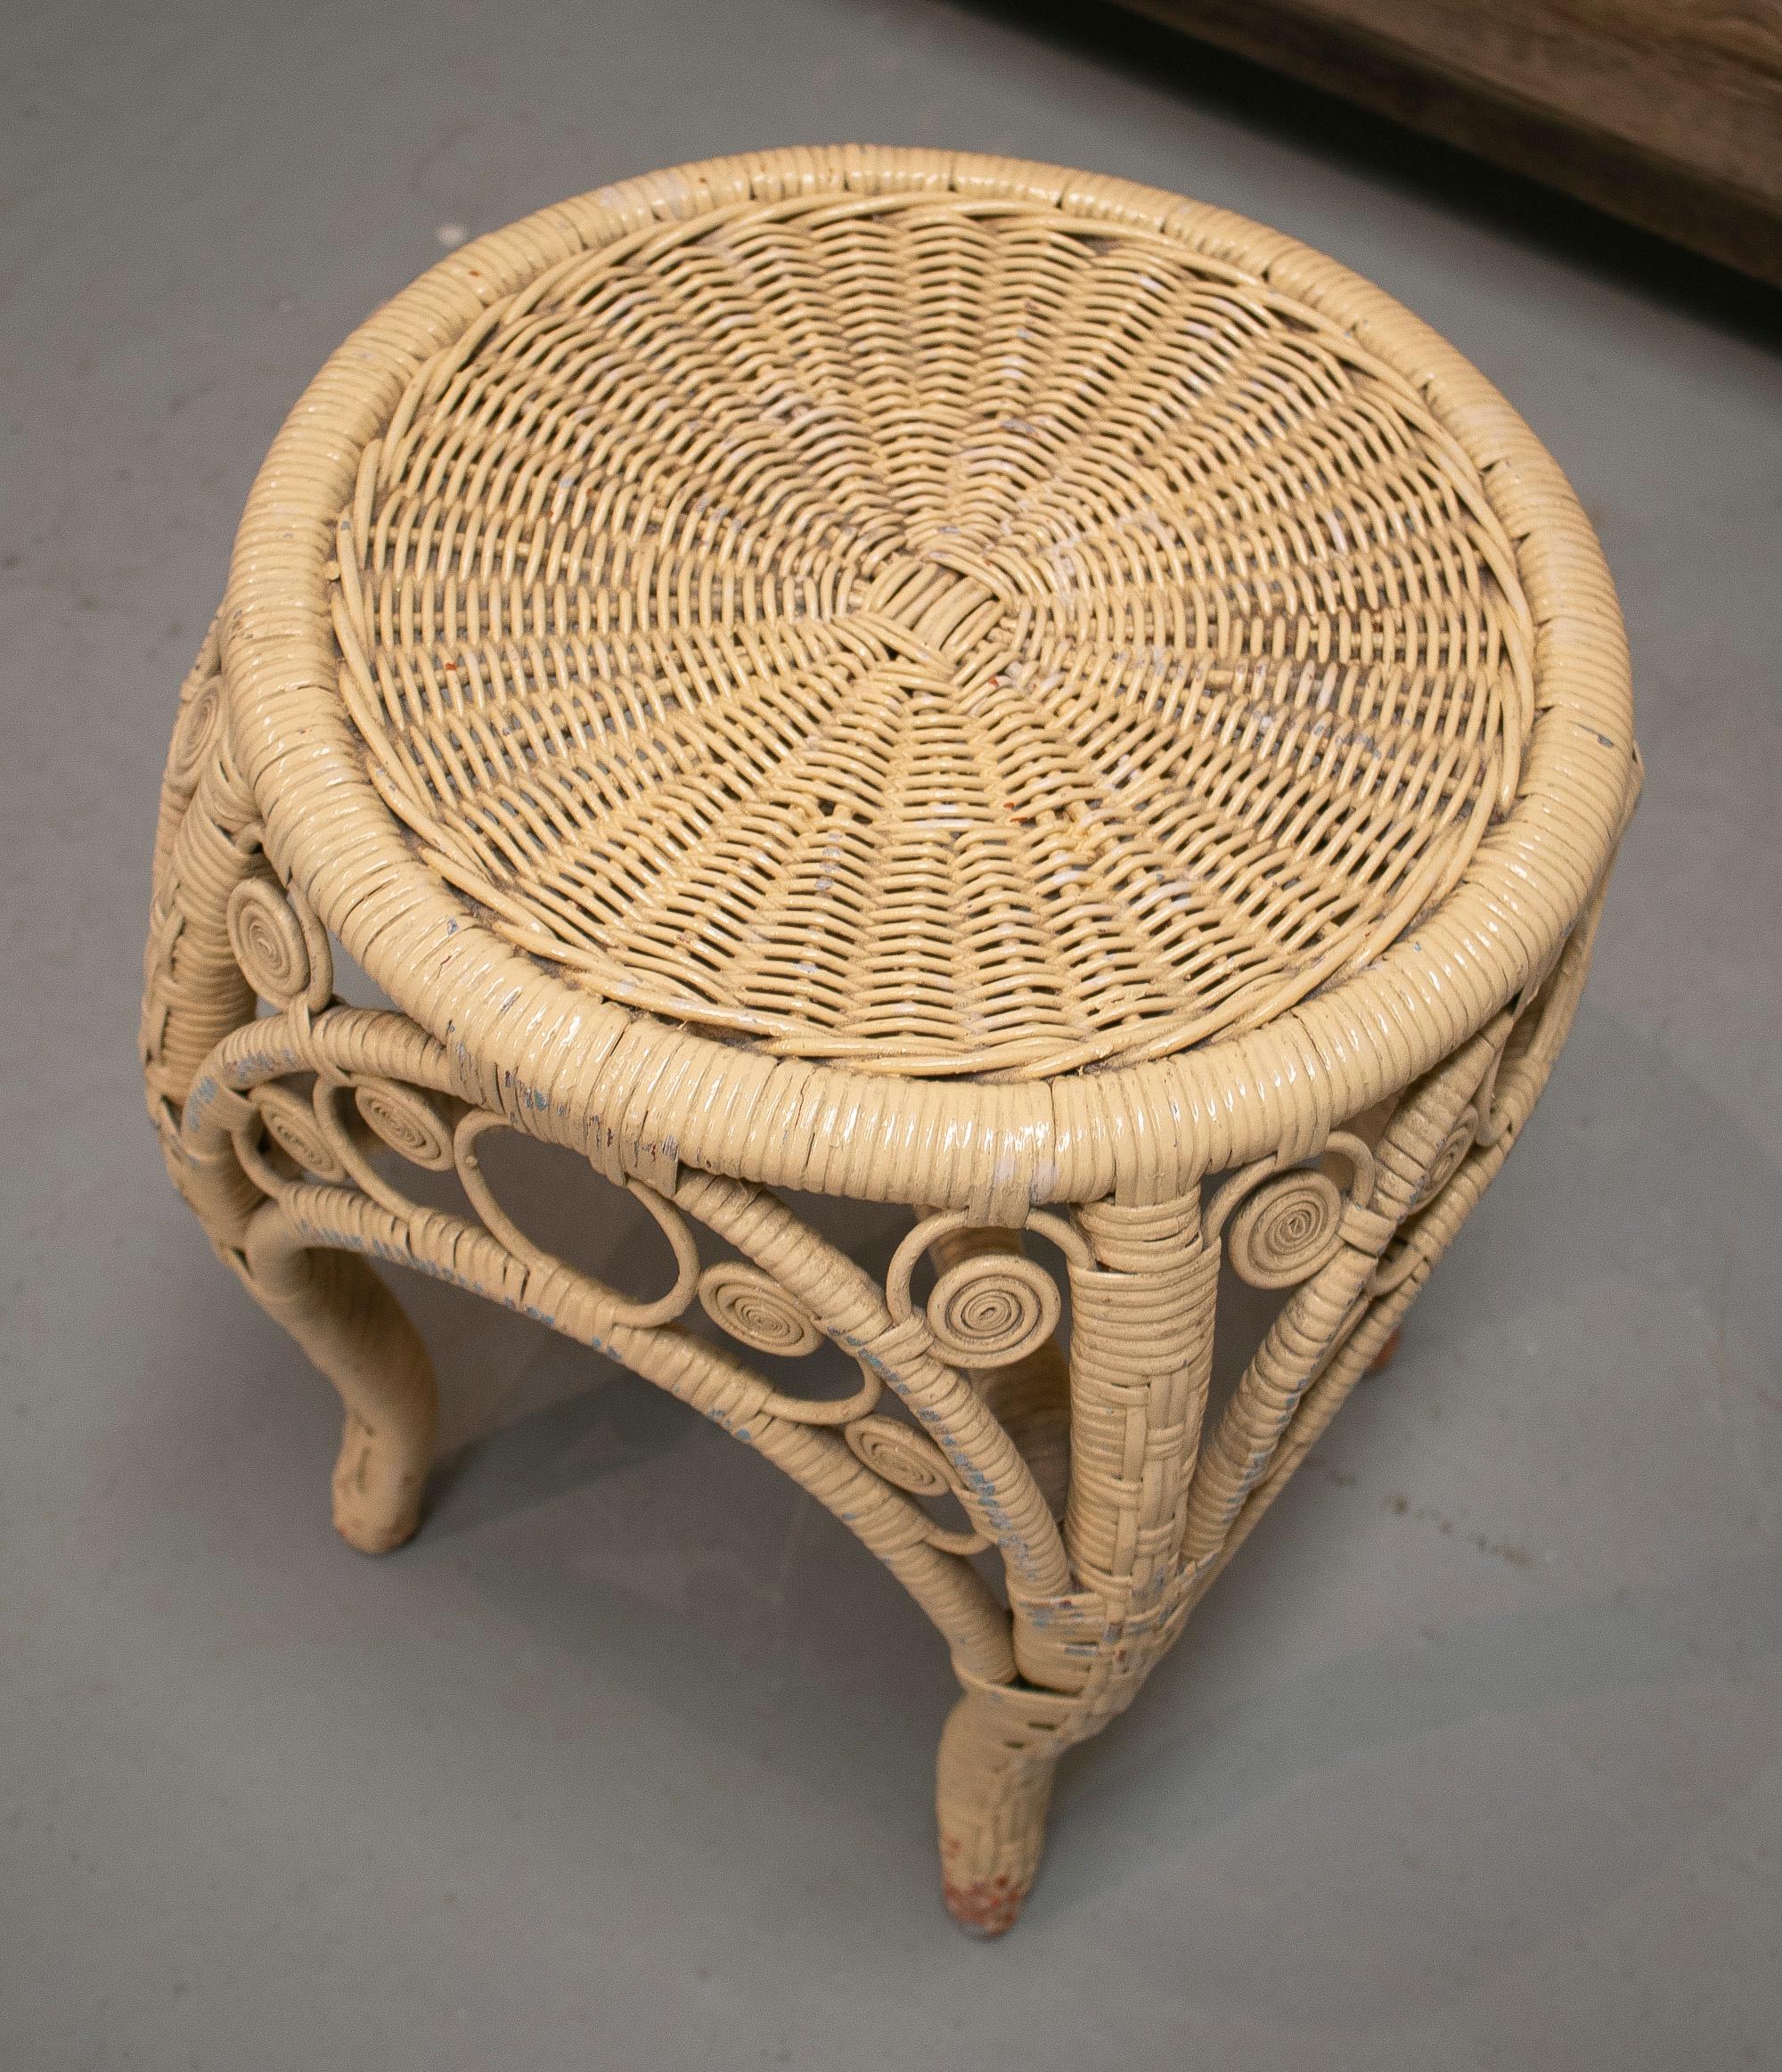 vintage wicker stool